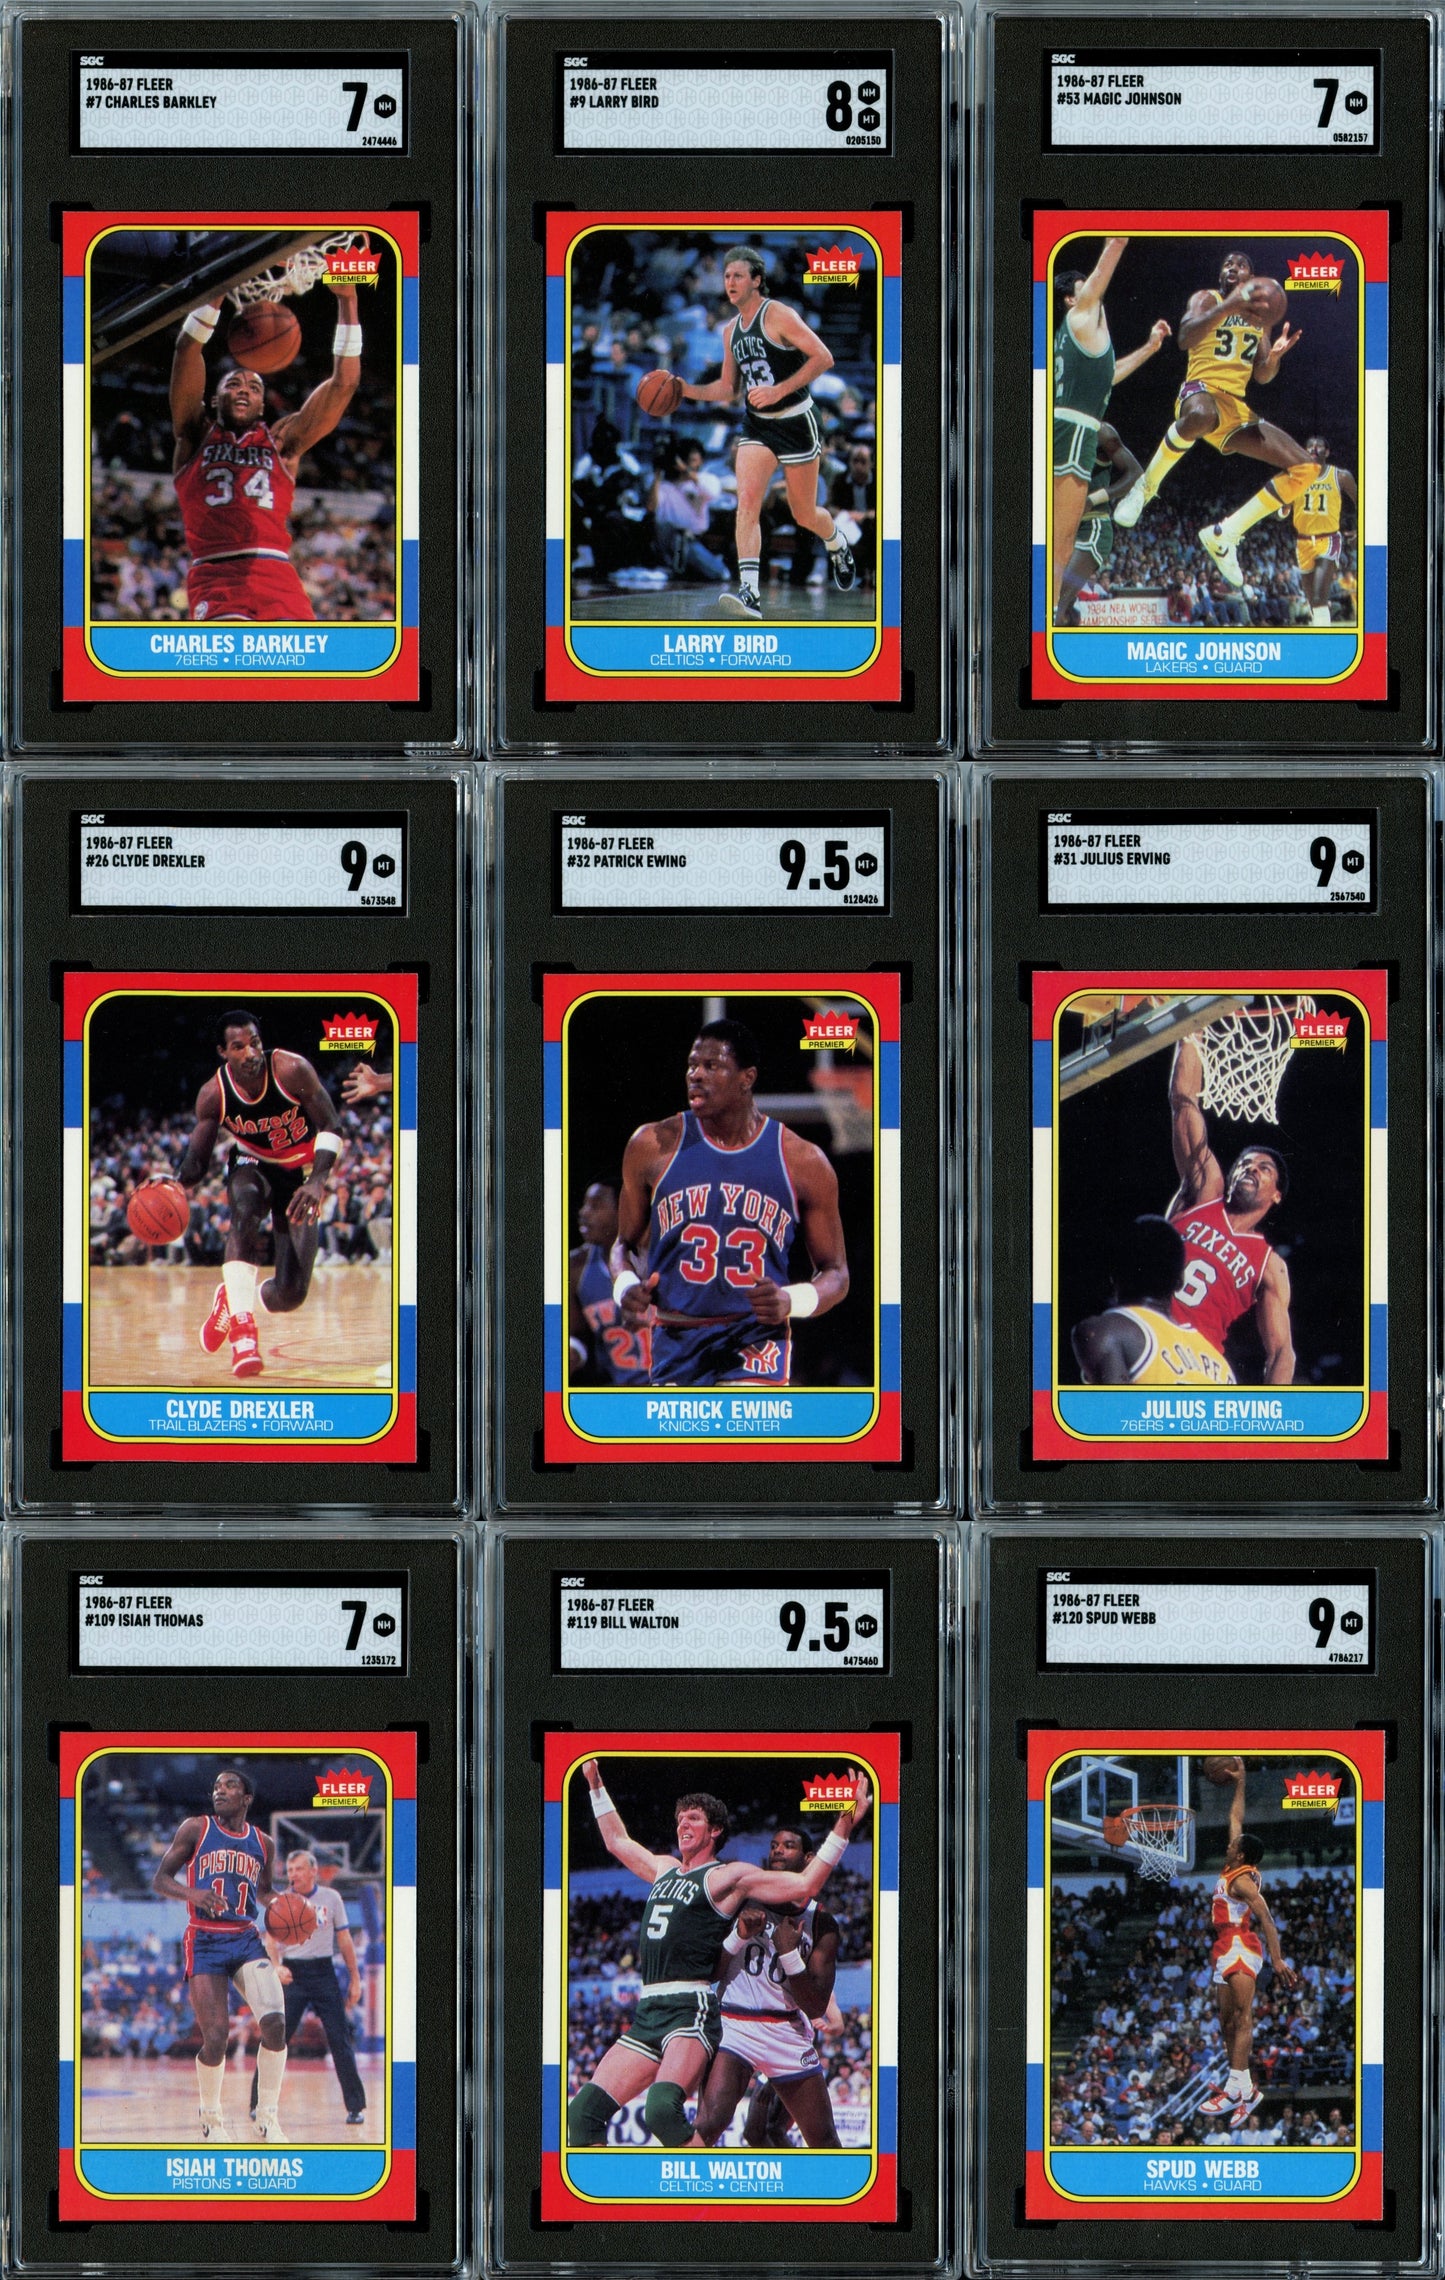 1986 Fleer Basketball Set Break 132 Spot Random Card (Michael Jordan Rookie PSA 9, Patrick Ewing Rookie SGC 9.5, Clyde Drexler Rookie SGC 9, Julius Erving SGC 9, Larry Bird SGC 8, etc.!)